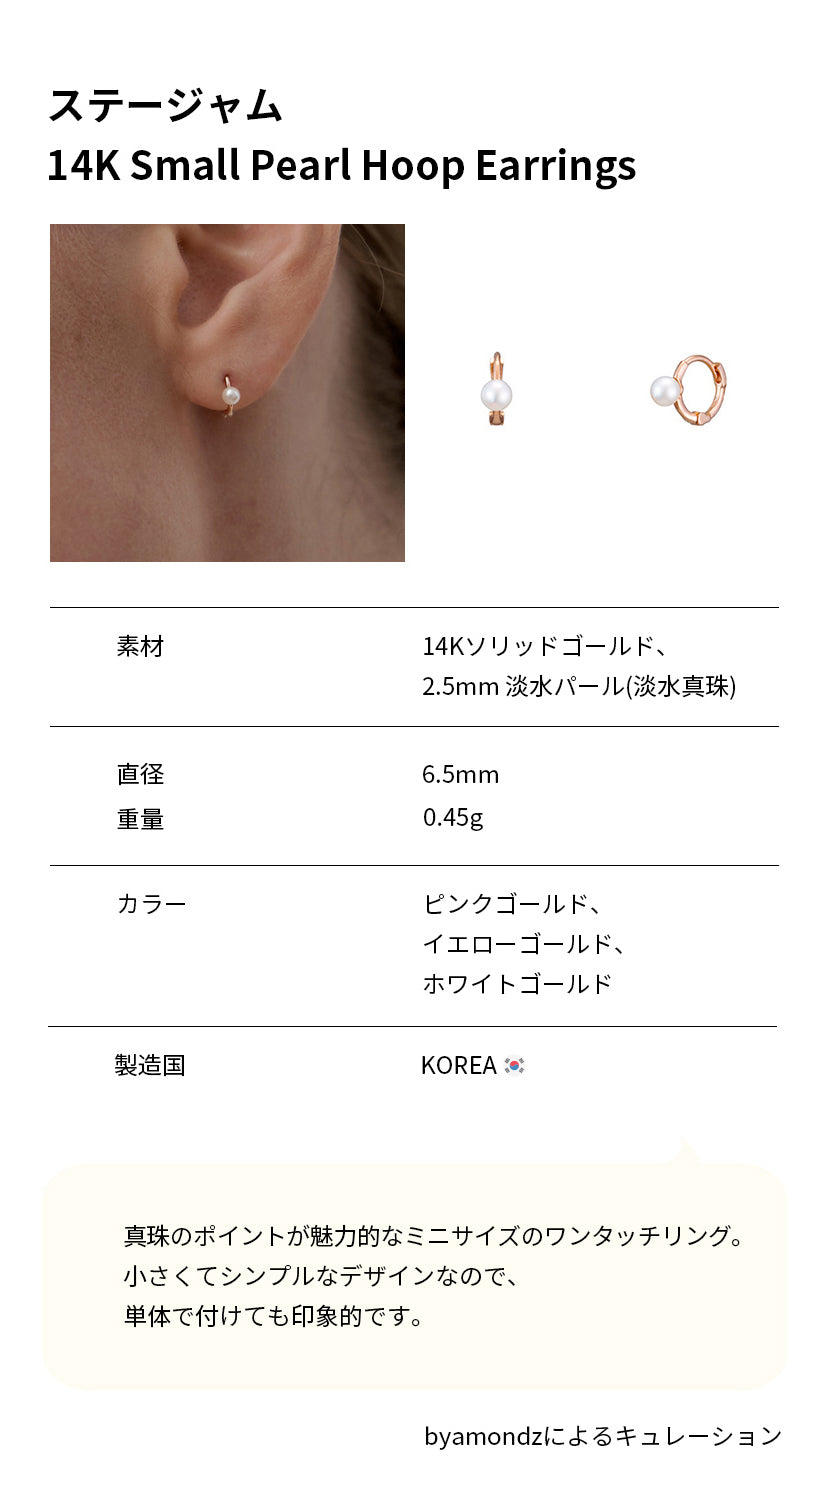 K14 スモール パール フープ ピアス / 14K Small Pearl Hoop Earrings